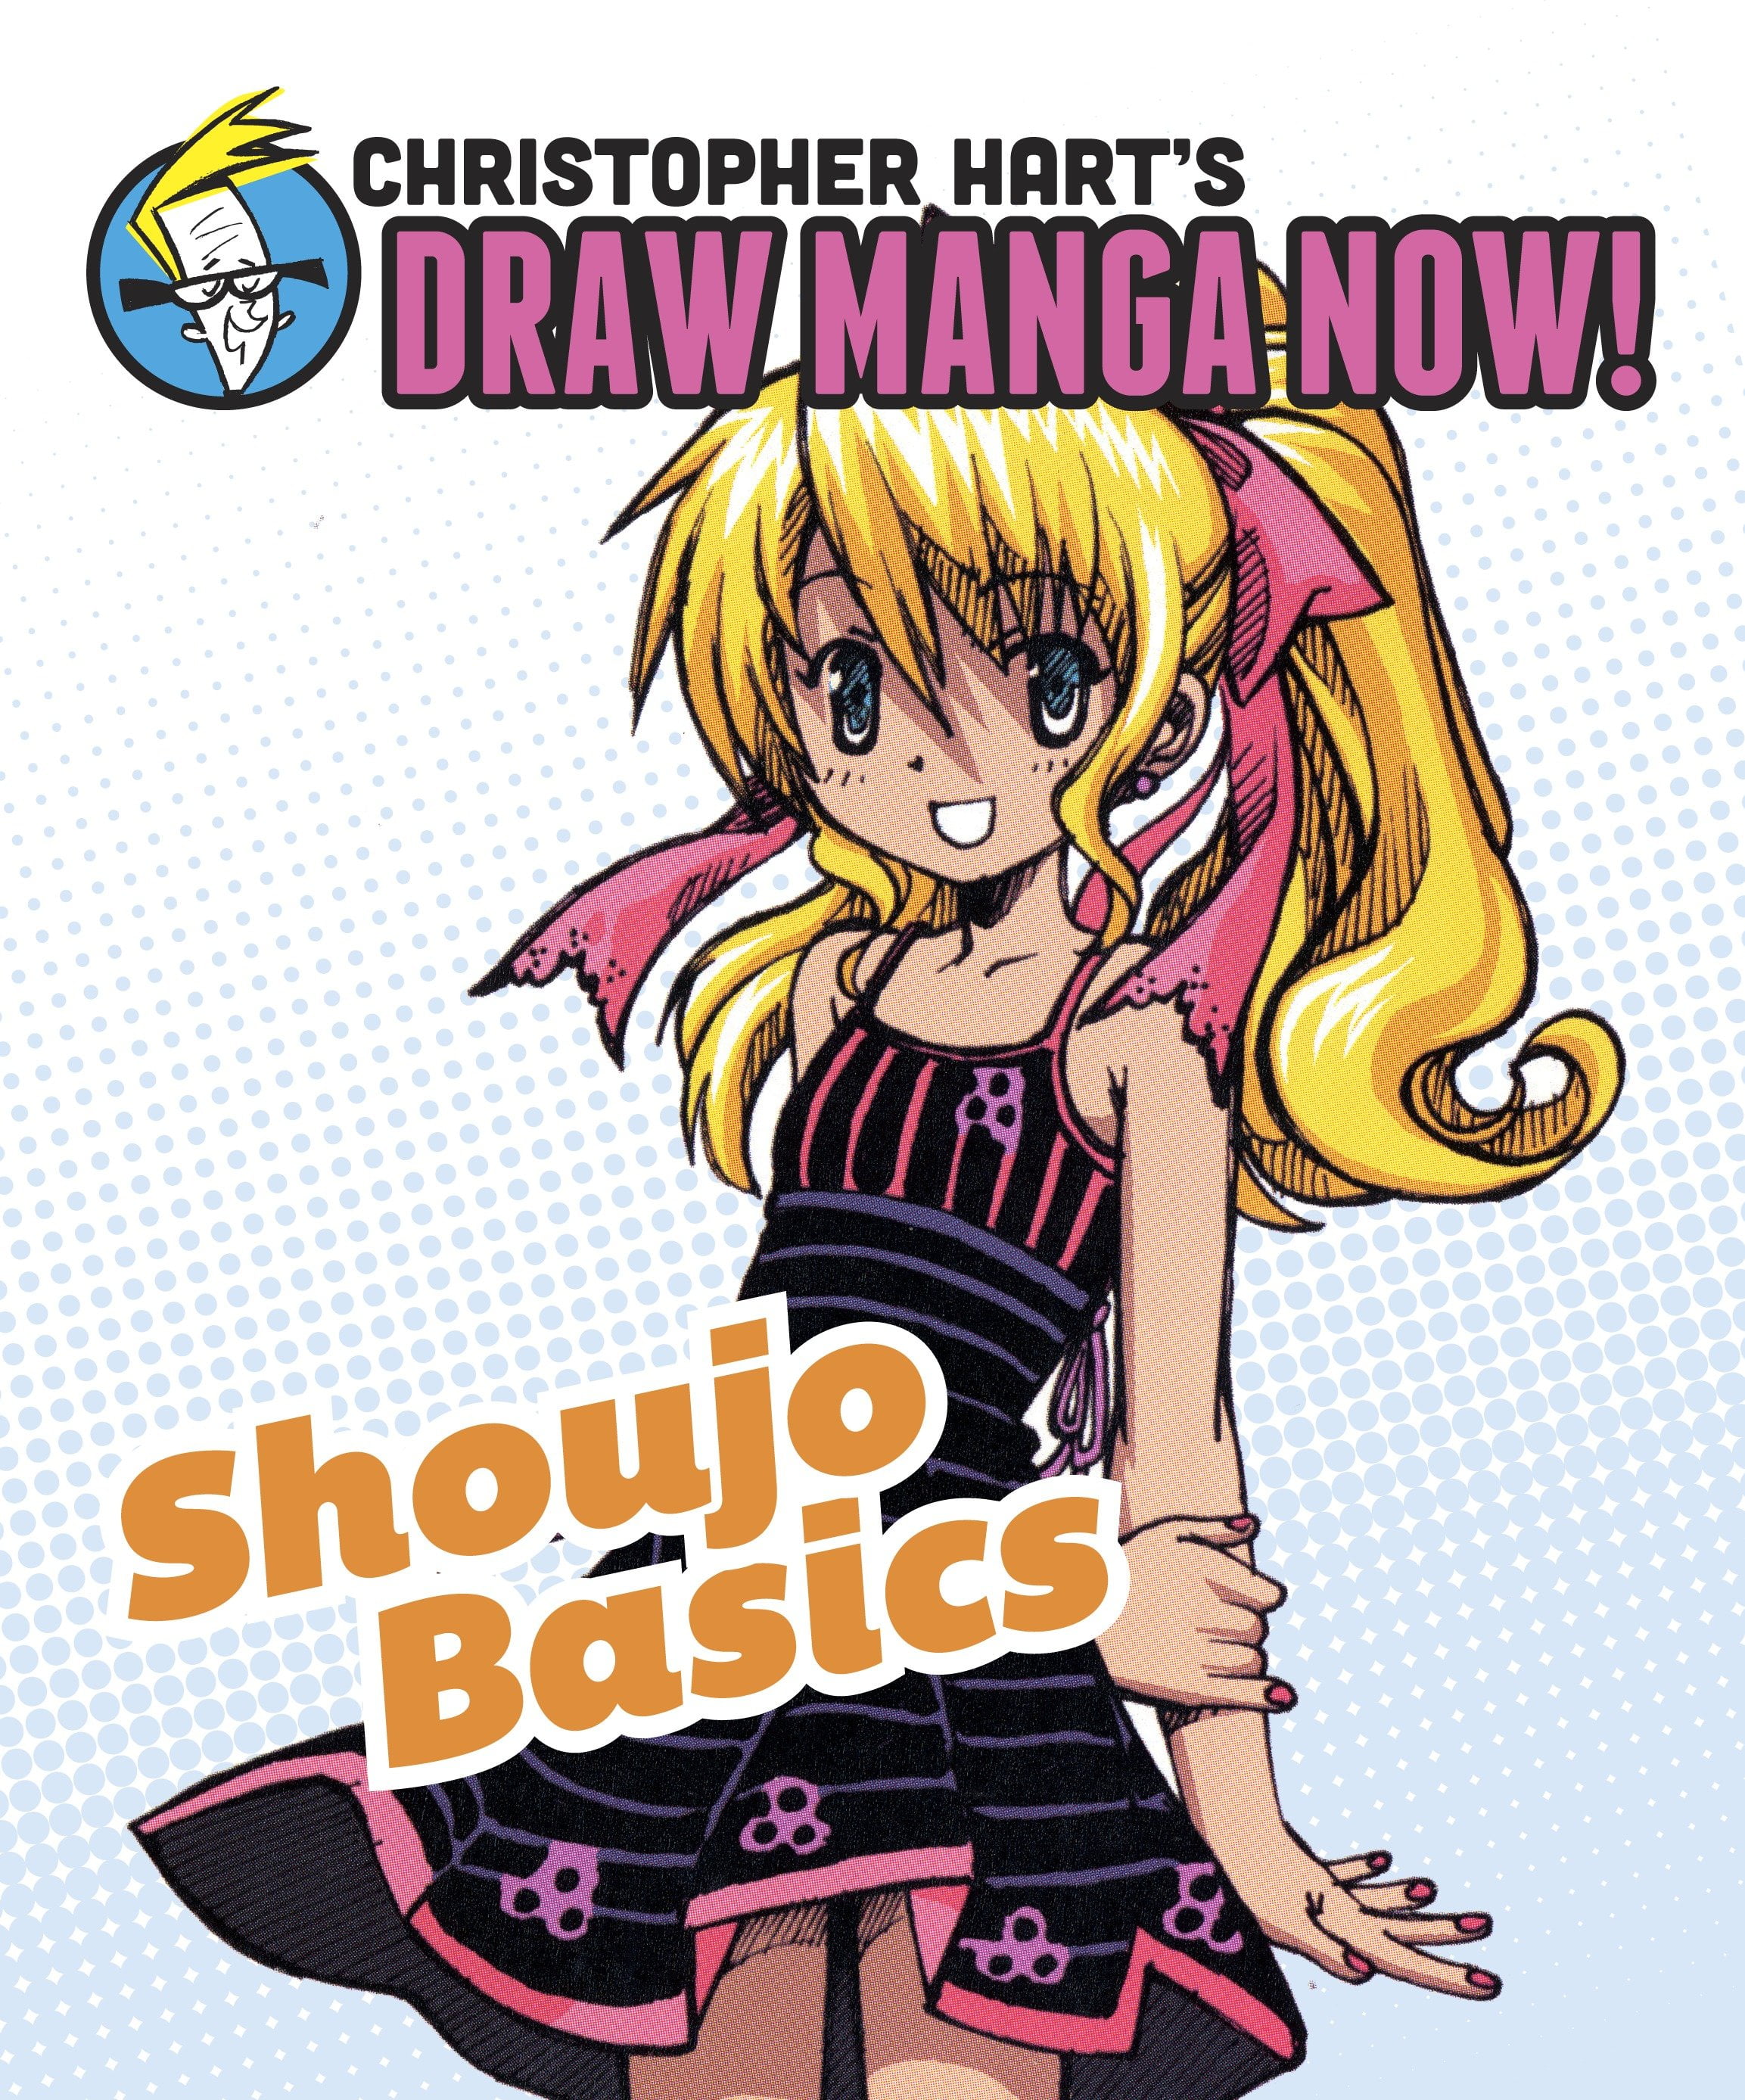 Premium Art Drawing Set - 24 pc Manga Animae Animation Sketch and